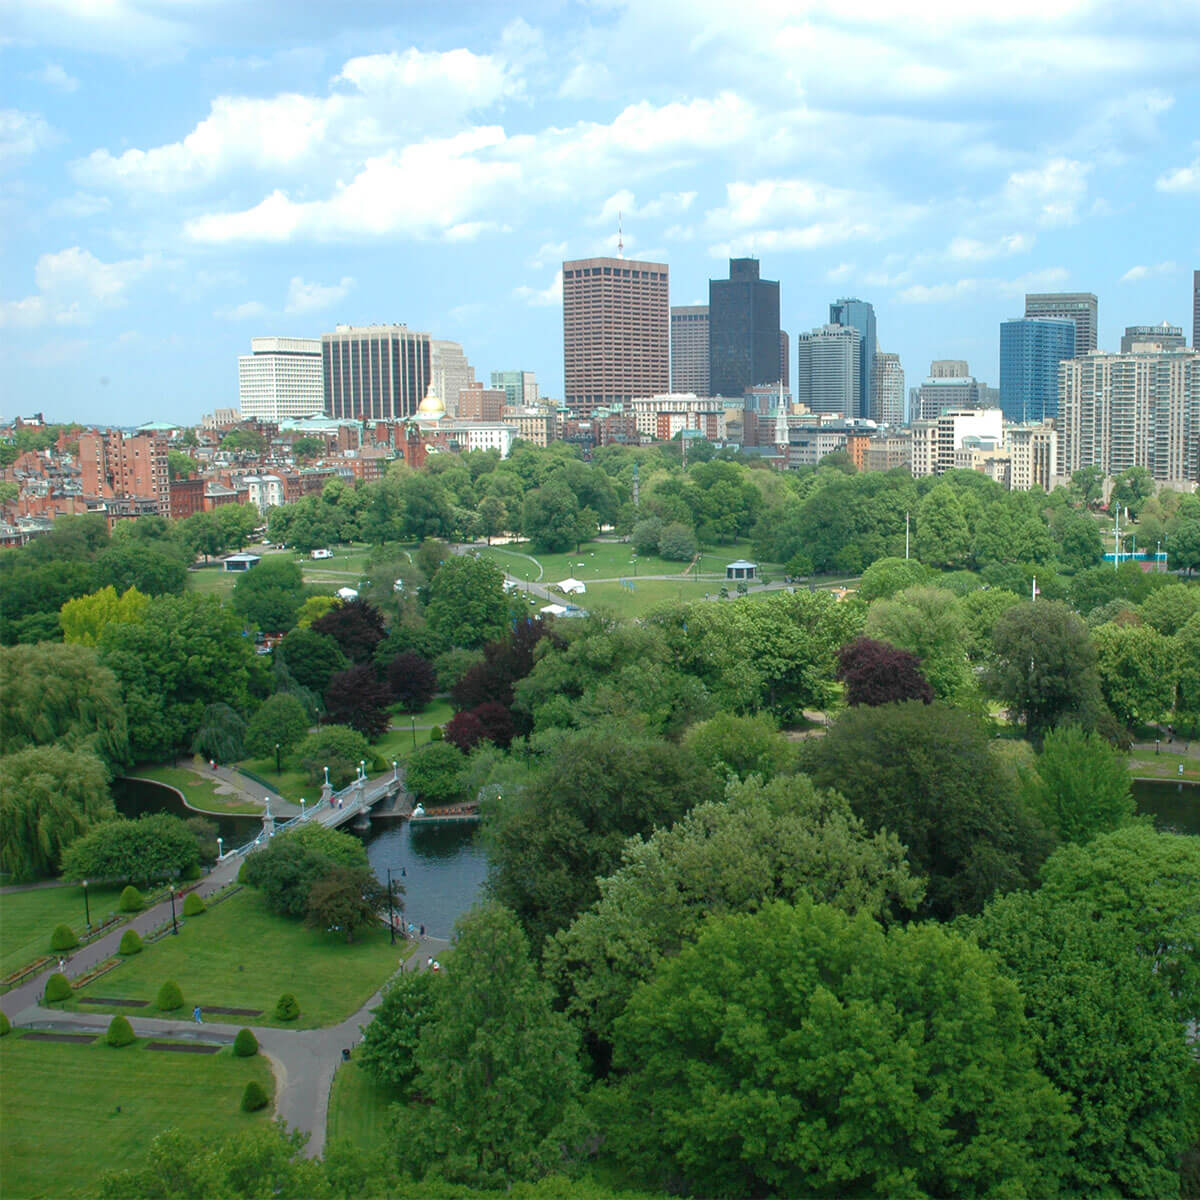 View of the Boston Common